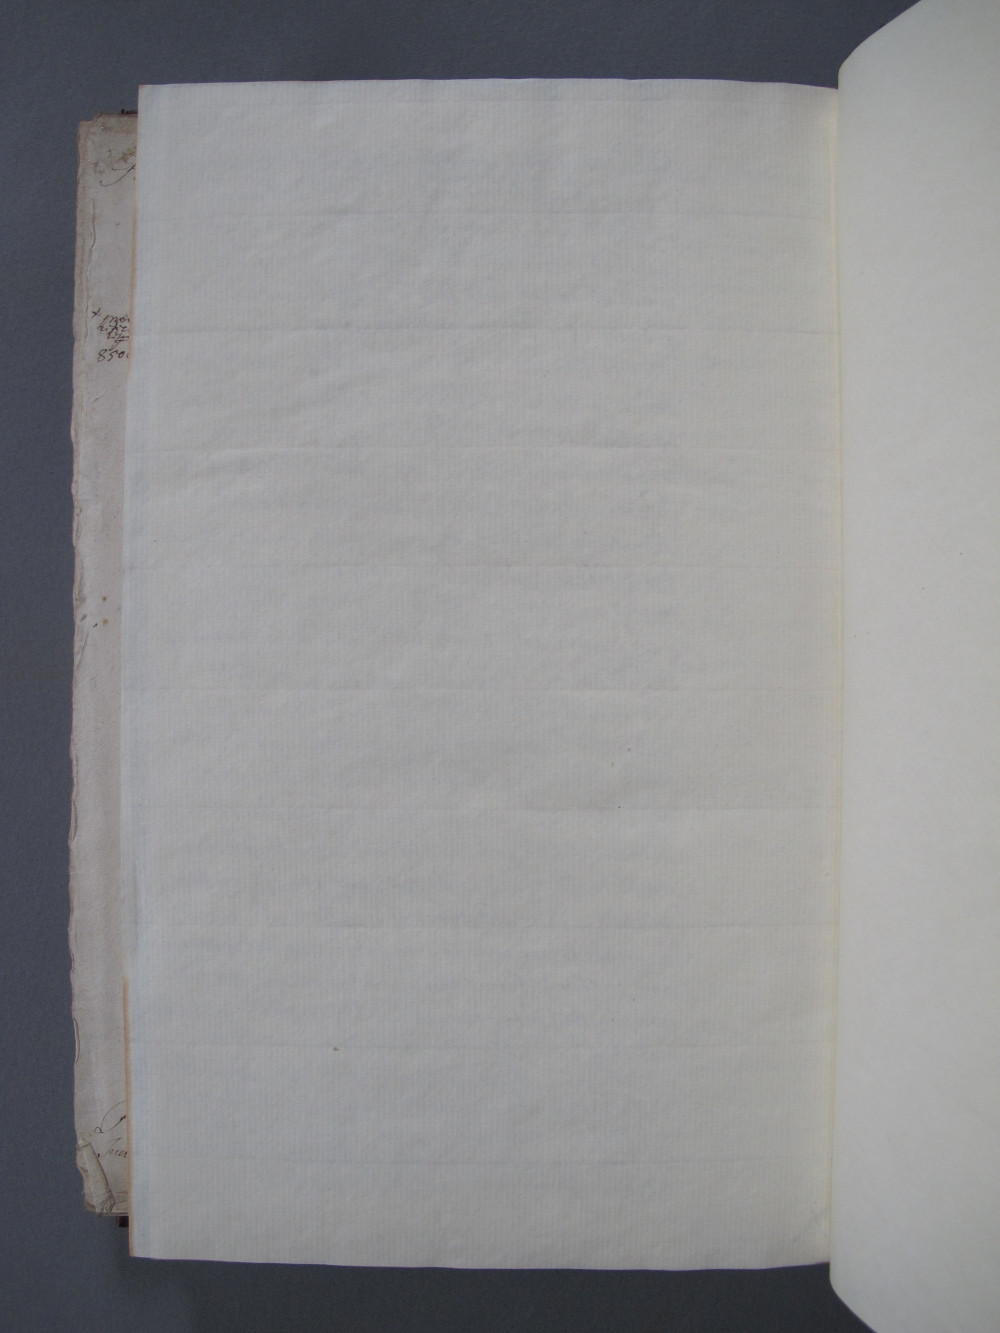 Folio 250 verso